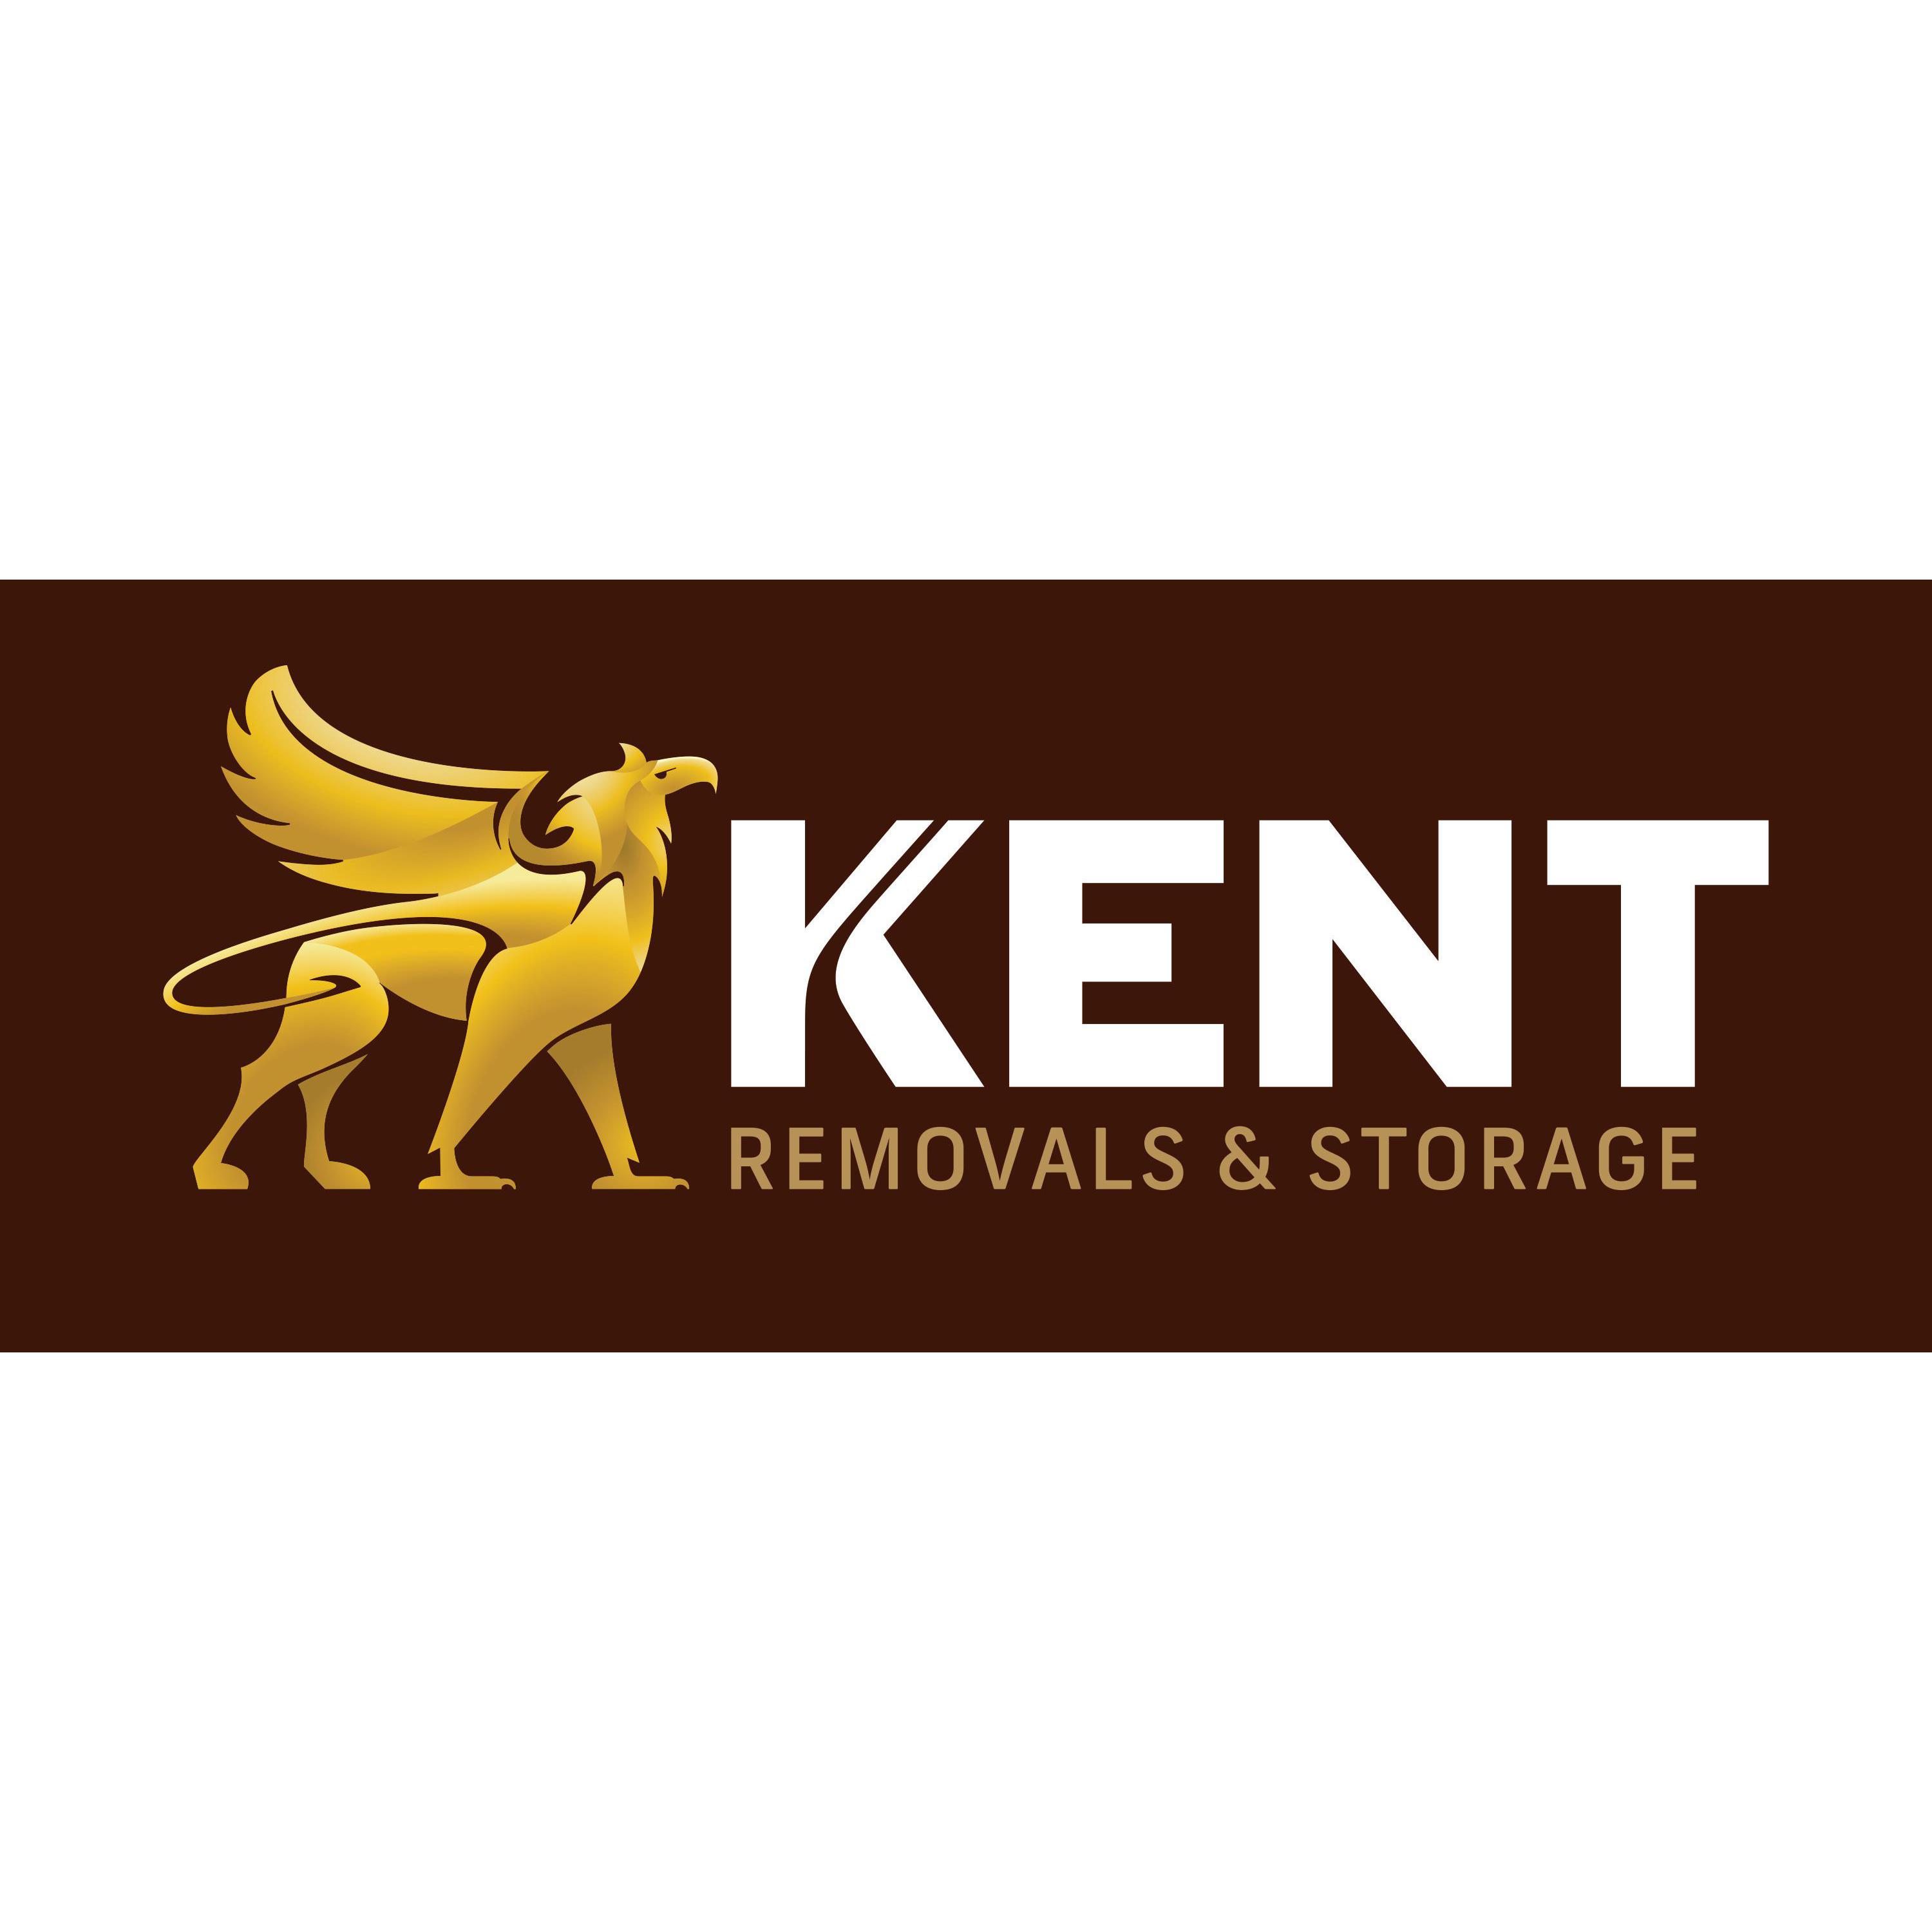 Kent Removals & Storage - Yennora, NSW 2161 - (13) 0065 9078 | ShowMeLocal.com